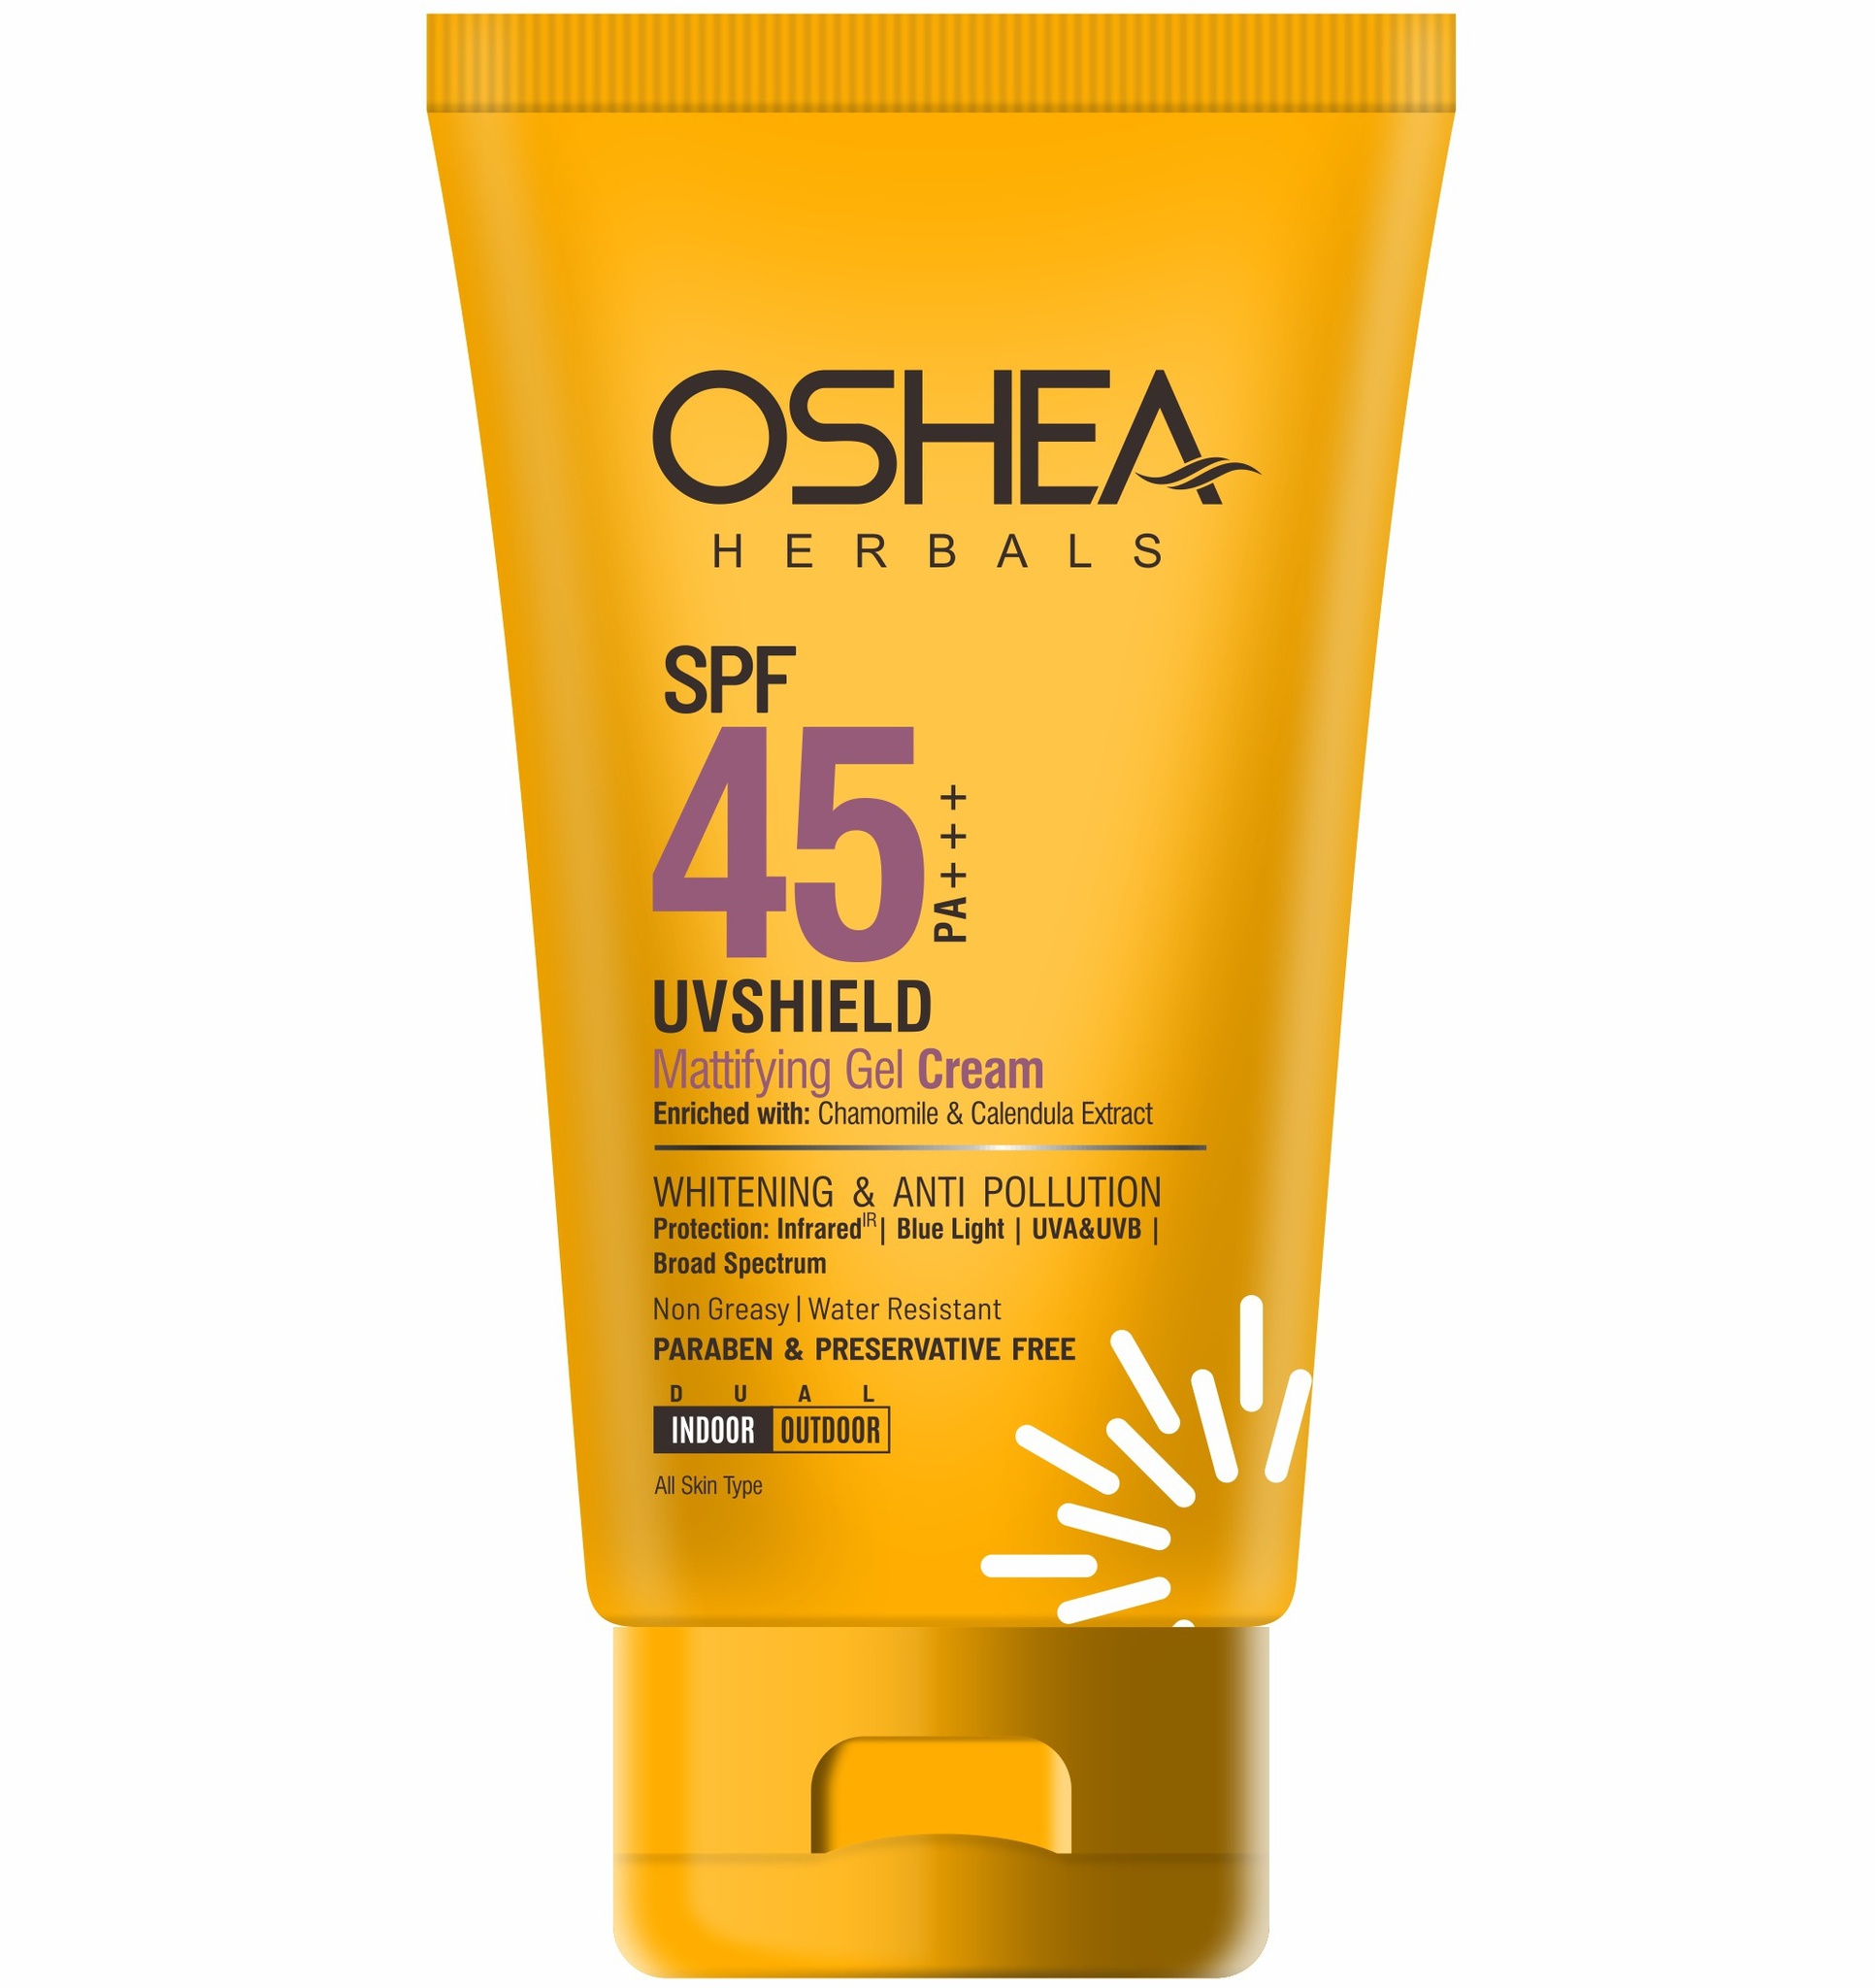 Oshea UVShield Mattifying Gel Cream SPF 45 Pa+++